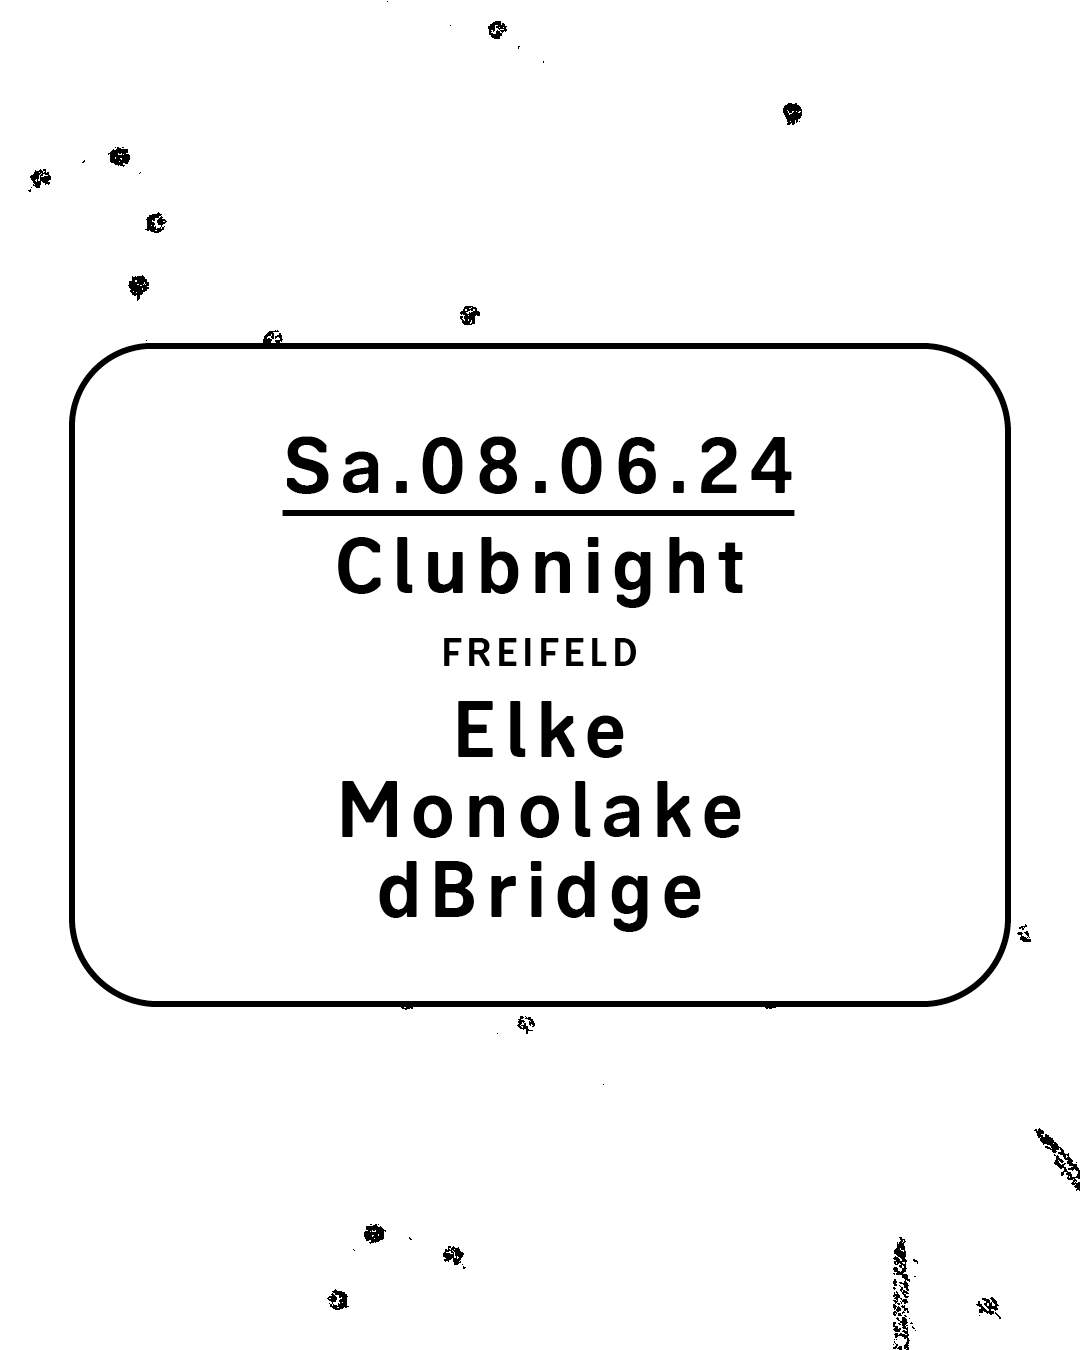 Clubnight - Elke, Monolake, dBridge, Elke - Página trasera